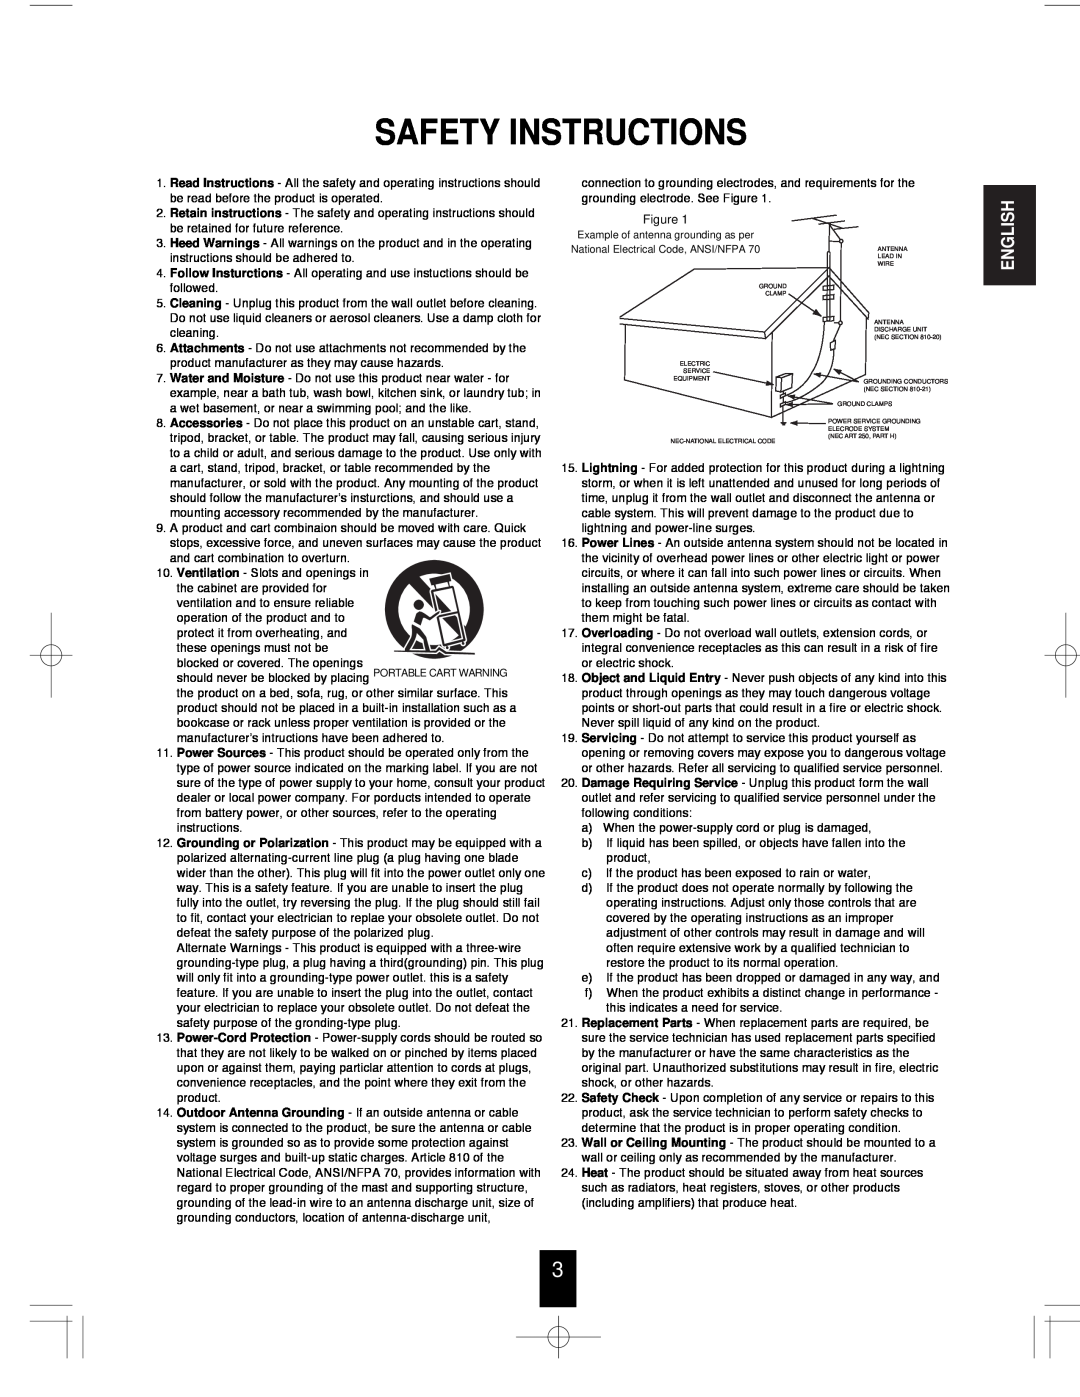 Sherwood R-765 manual Safety Instructions, English 